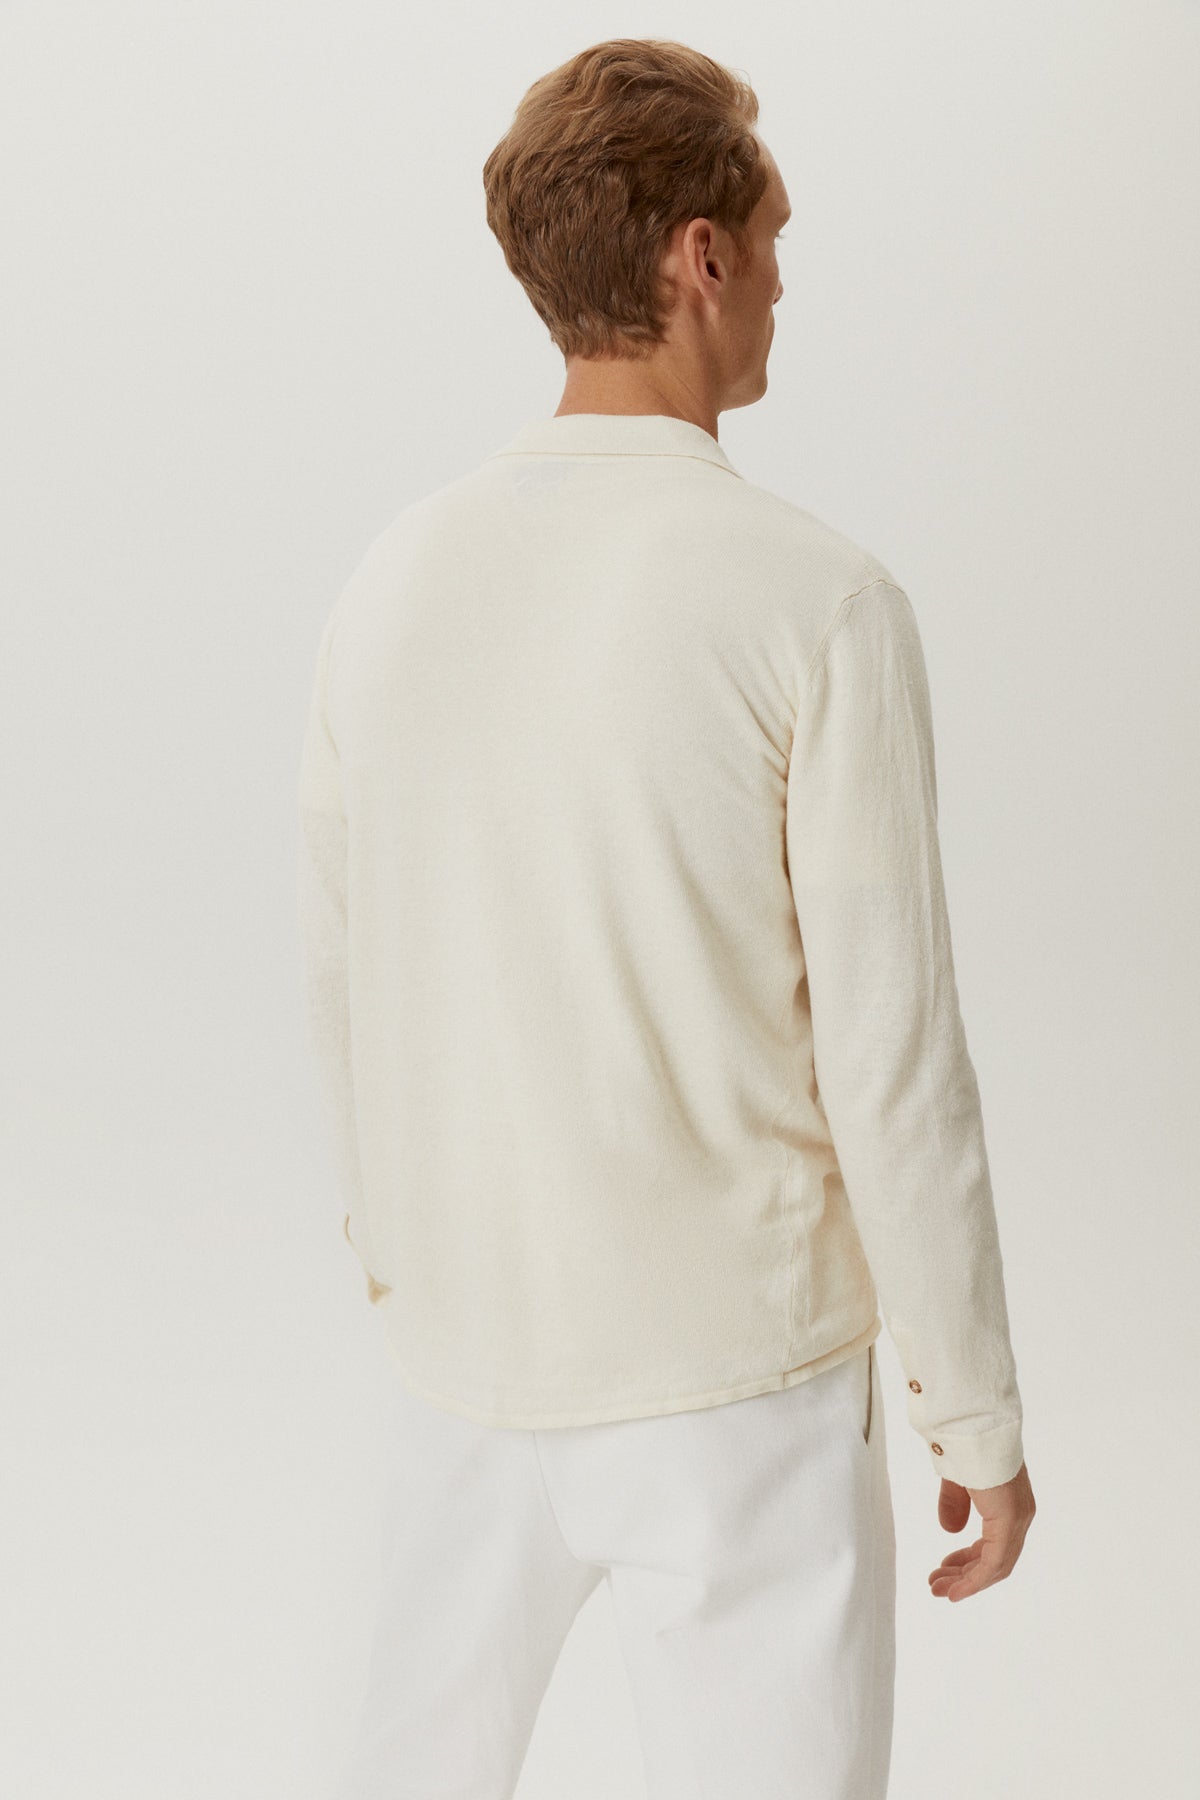 the linen cotton knit shirt milk white